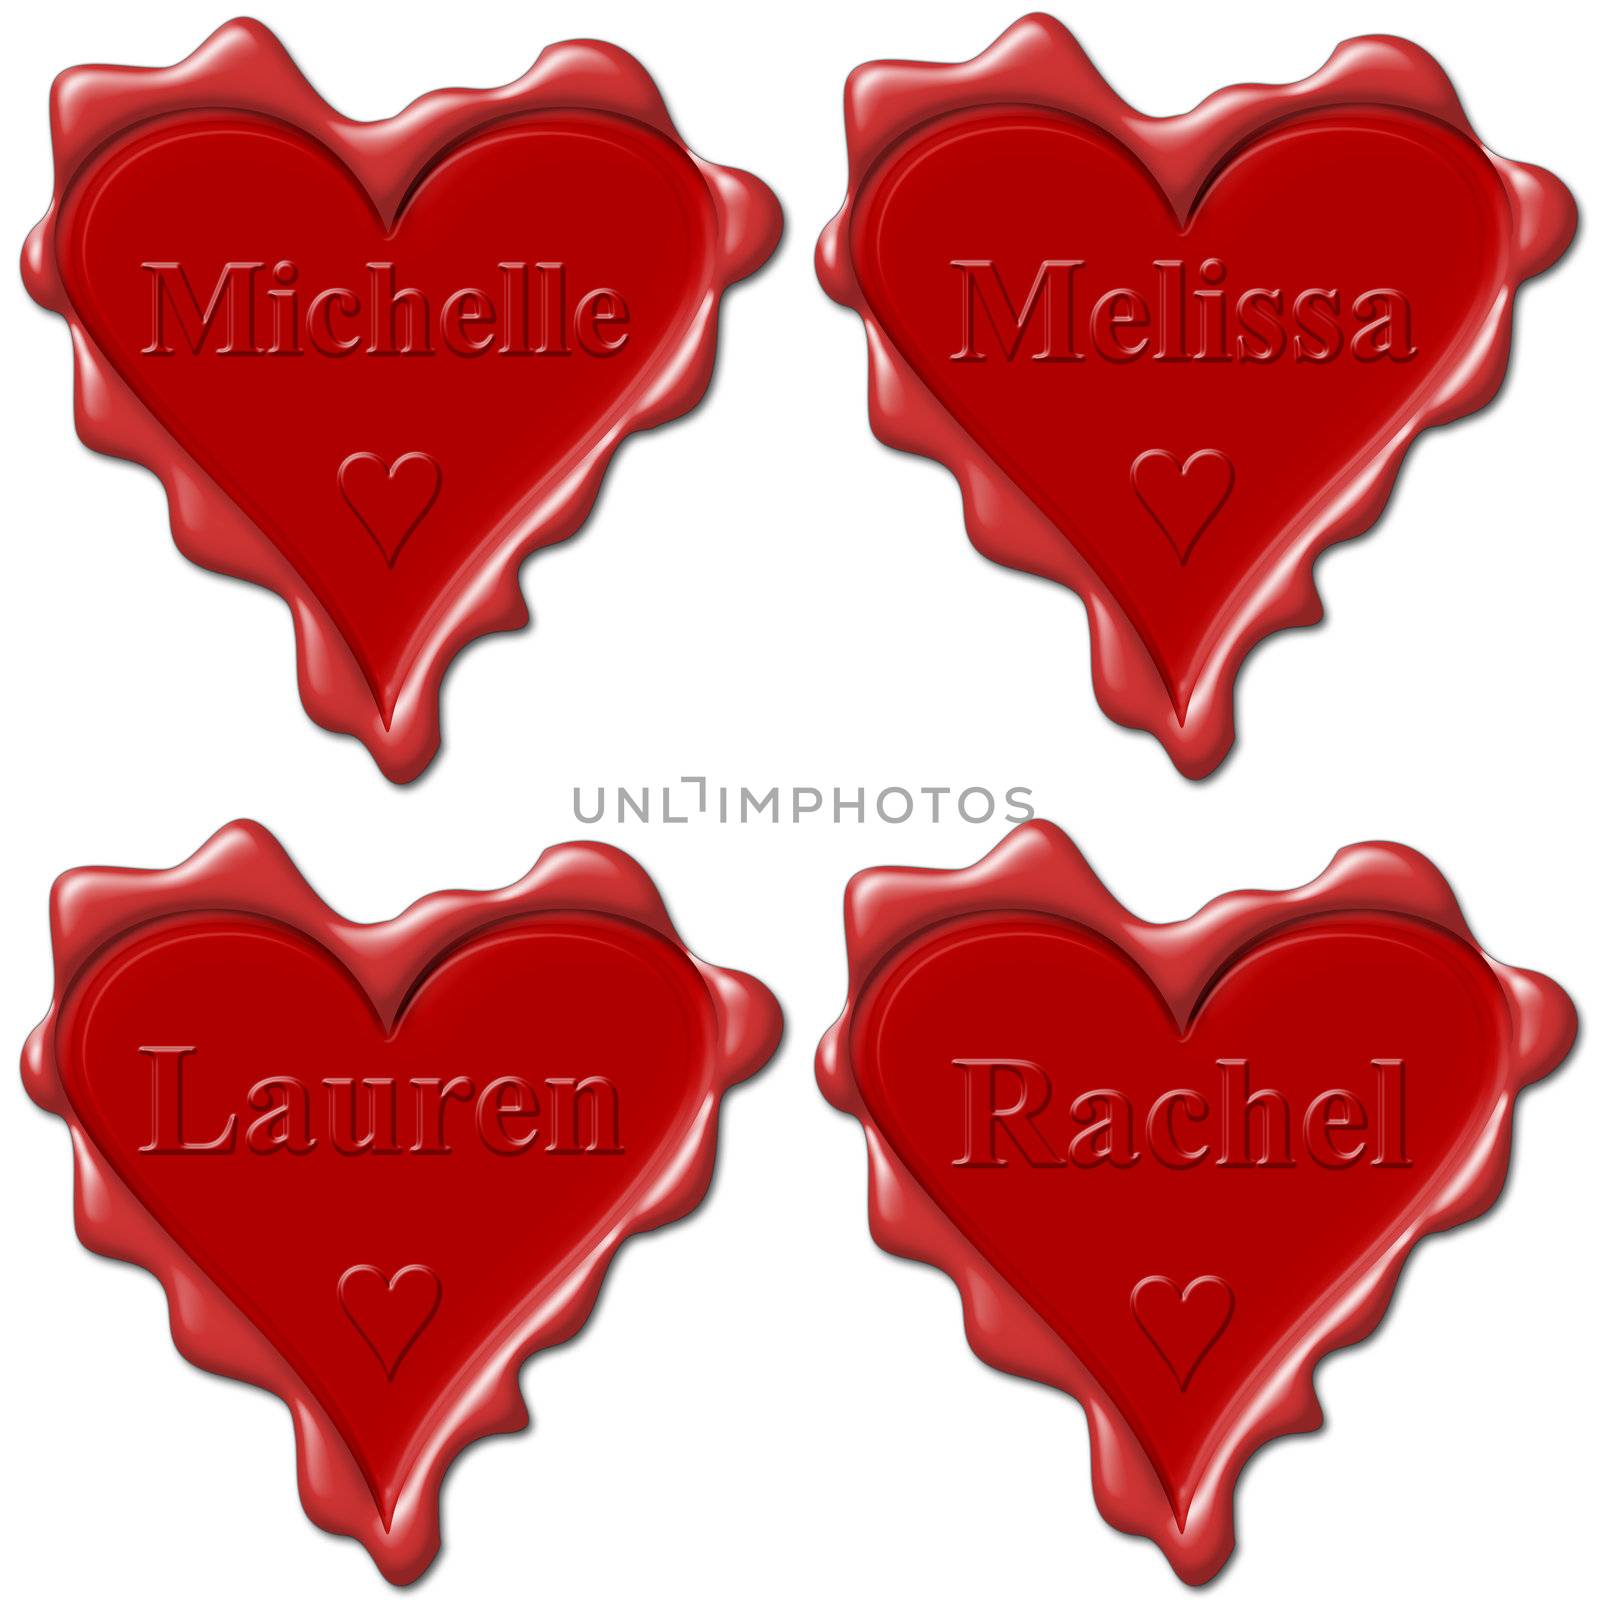 Valentine love hearts with names: Michelle, Melissa, Lauren, Rachel